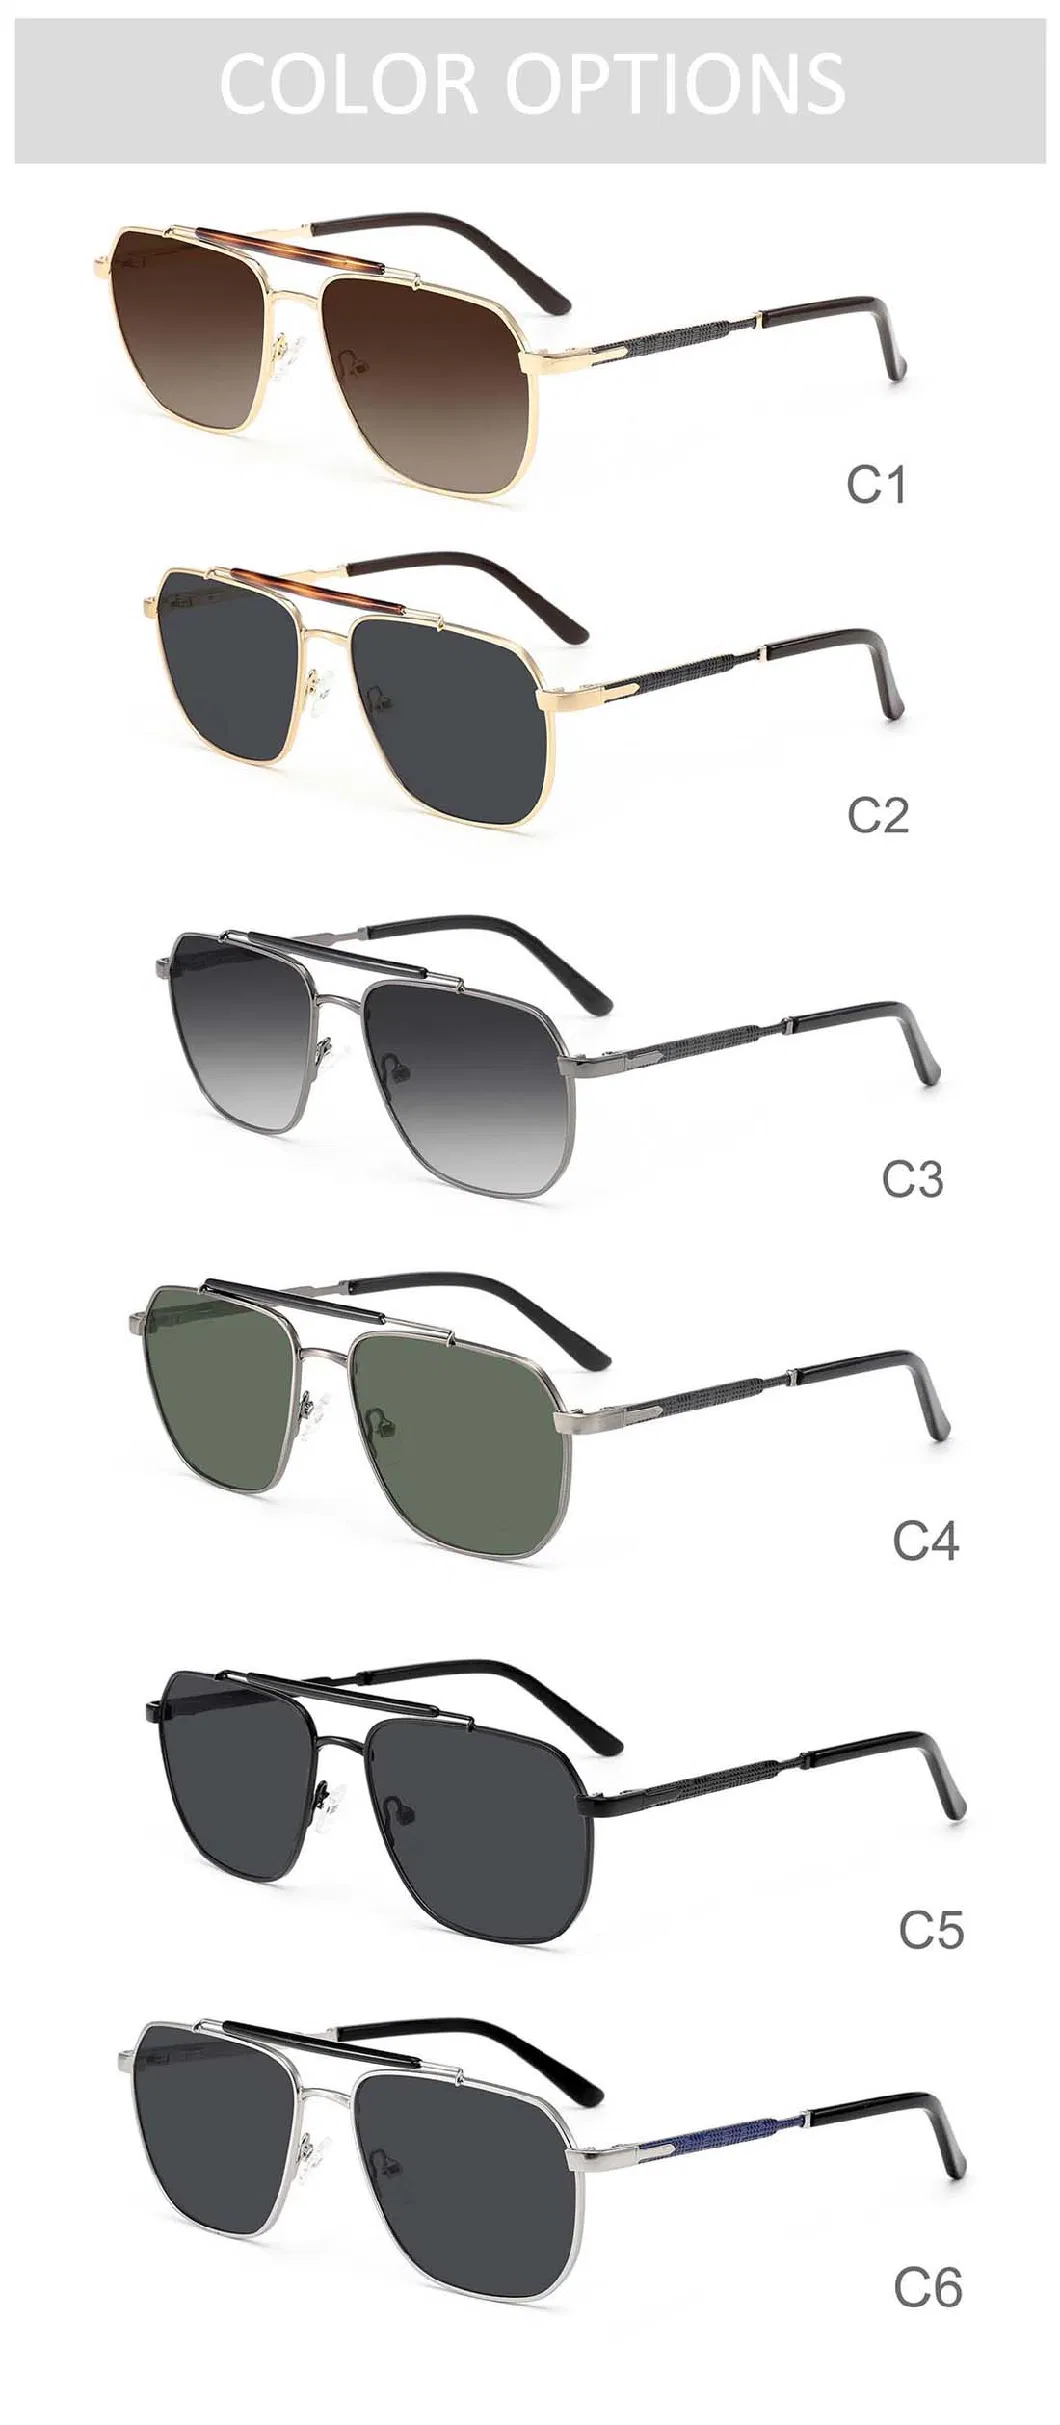 Gd New Latest Fashion Metal Sunglasses Double Bridge Designer Brand Sunglasses Luxury Shades Famous Sun Branded Inspired Sunglasses